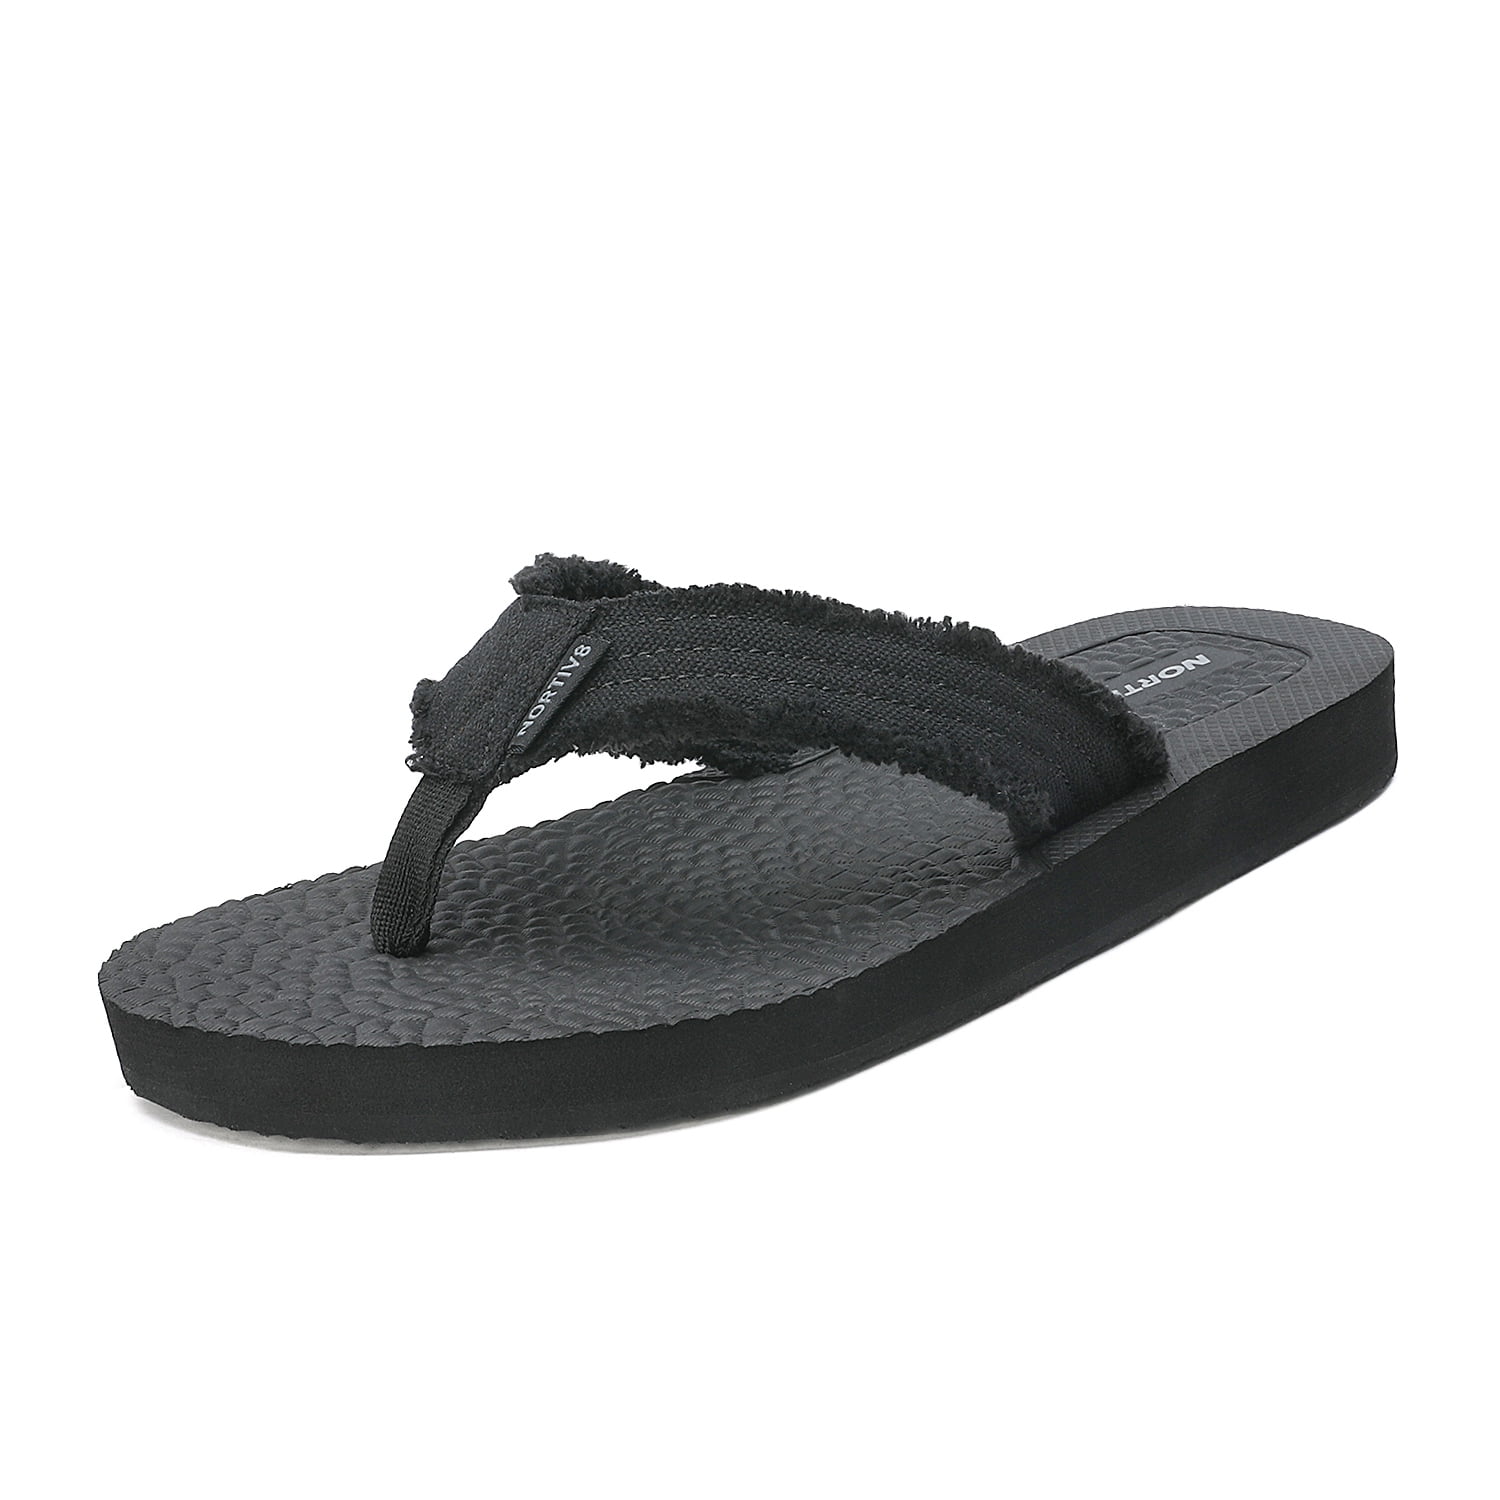 NORTIV 8 Mens Flip Flops Beach Sandals Lightweight EVA Sole Comfort ...